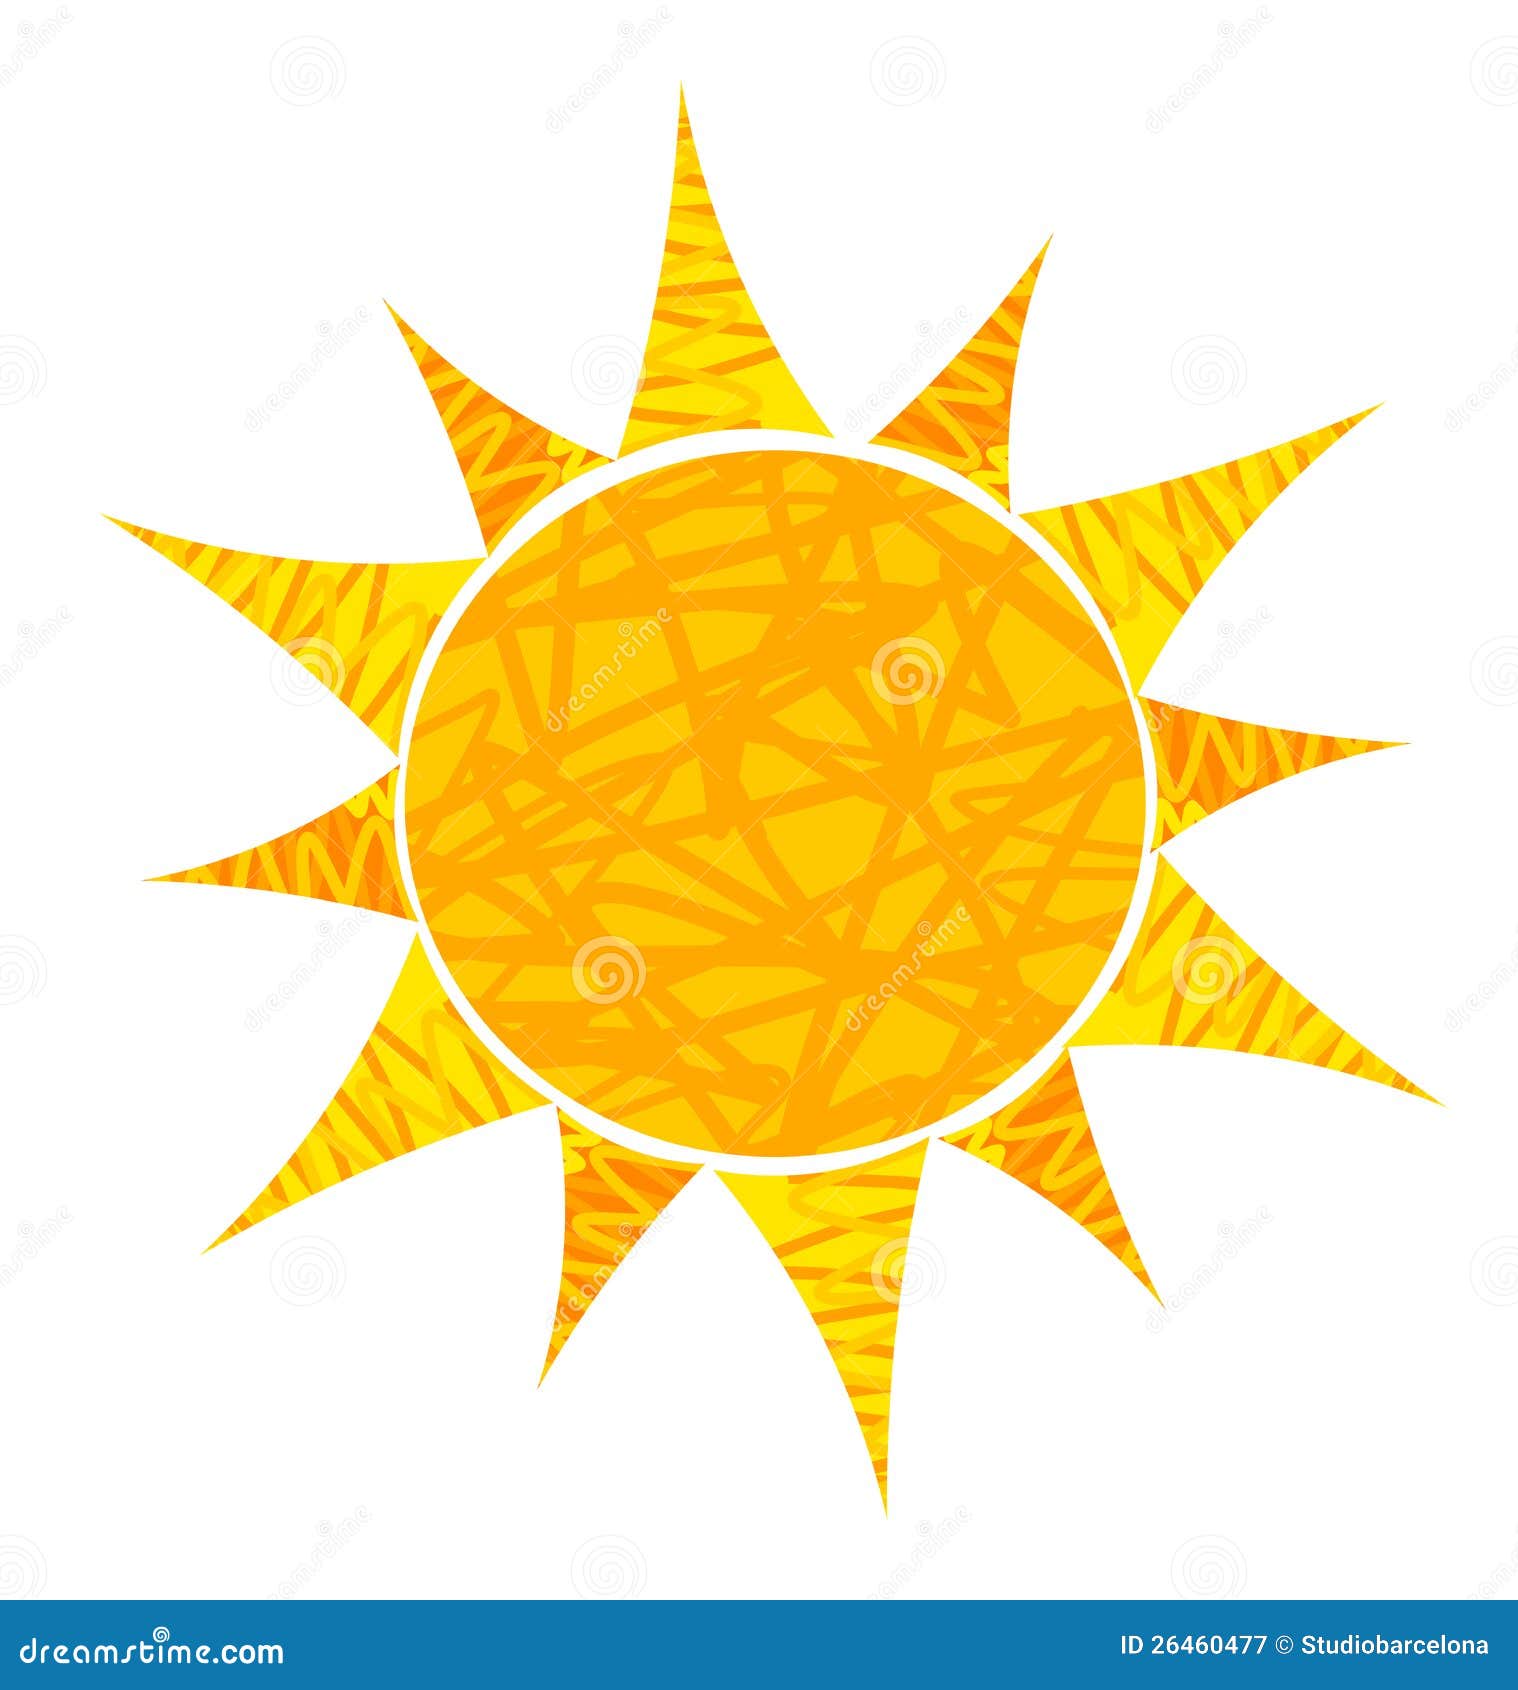 Sun illustration stock illustration. Image of energy - 26460477